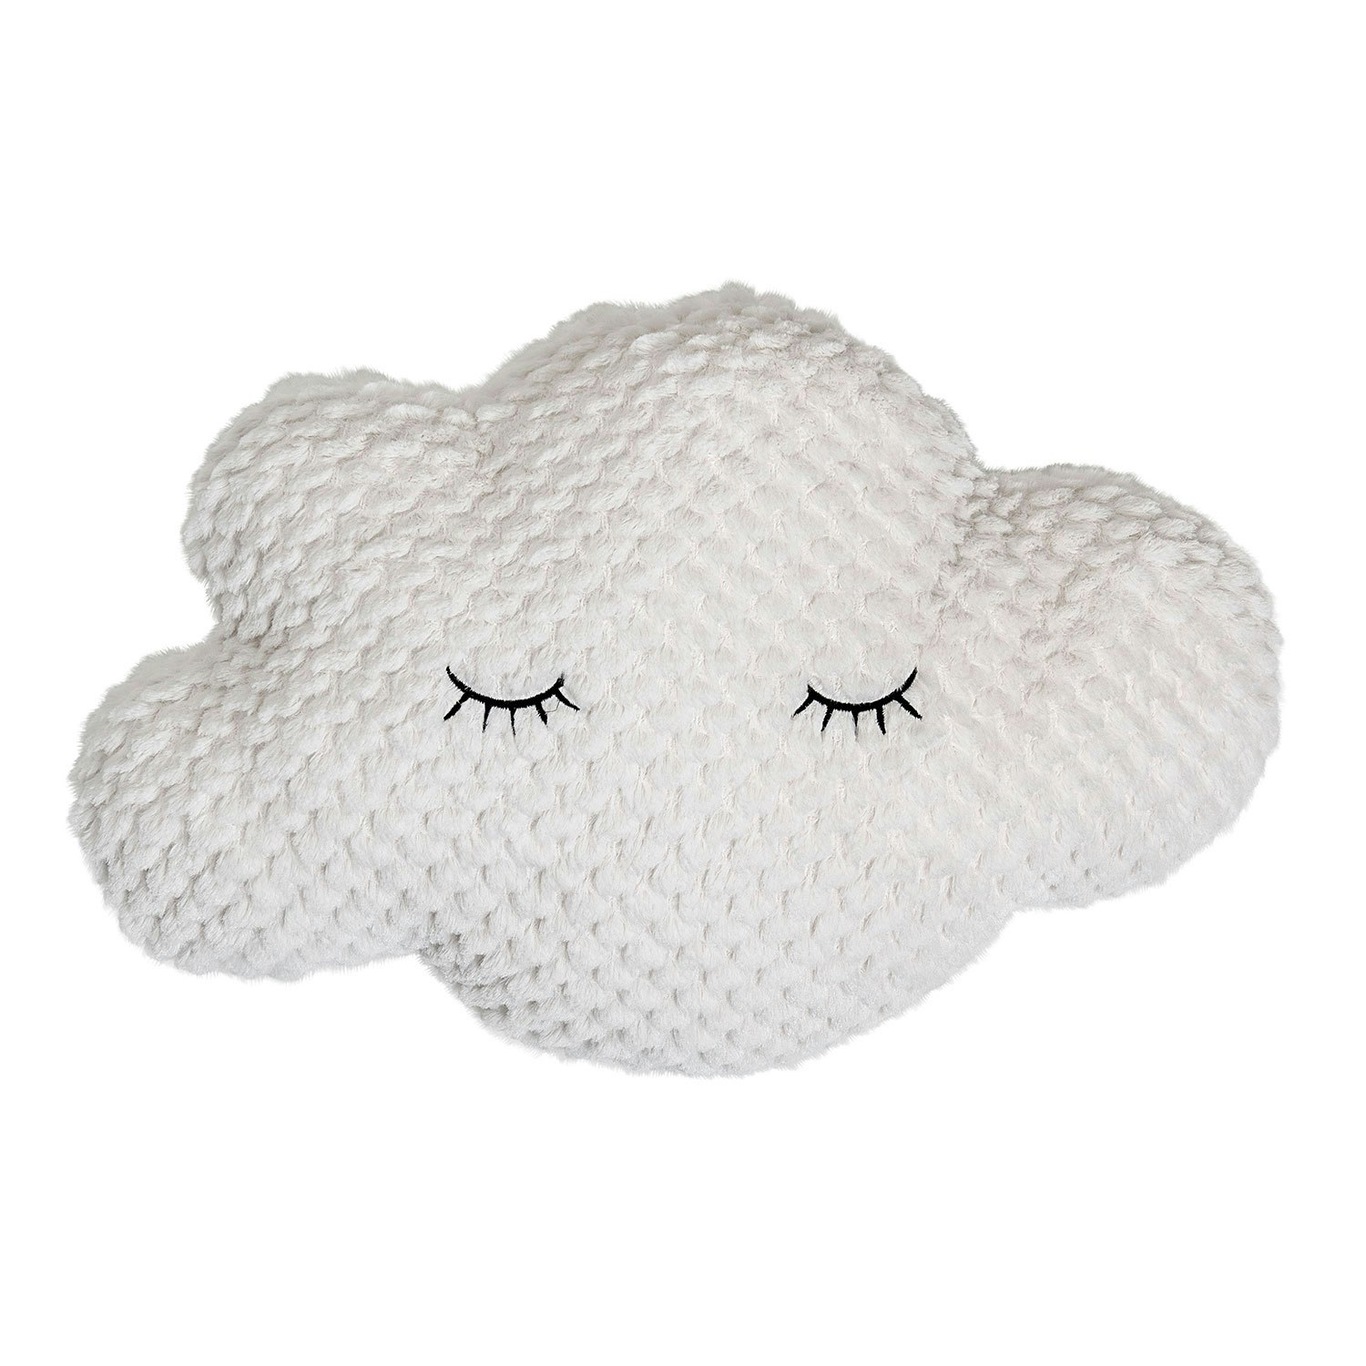 https://royaldesign.com/image/2/bloomingville-cloud-pillow-30x45-cm-white-0?w=800&quality=80